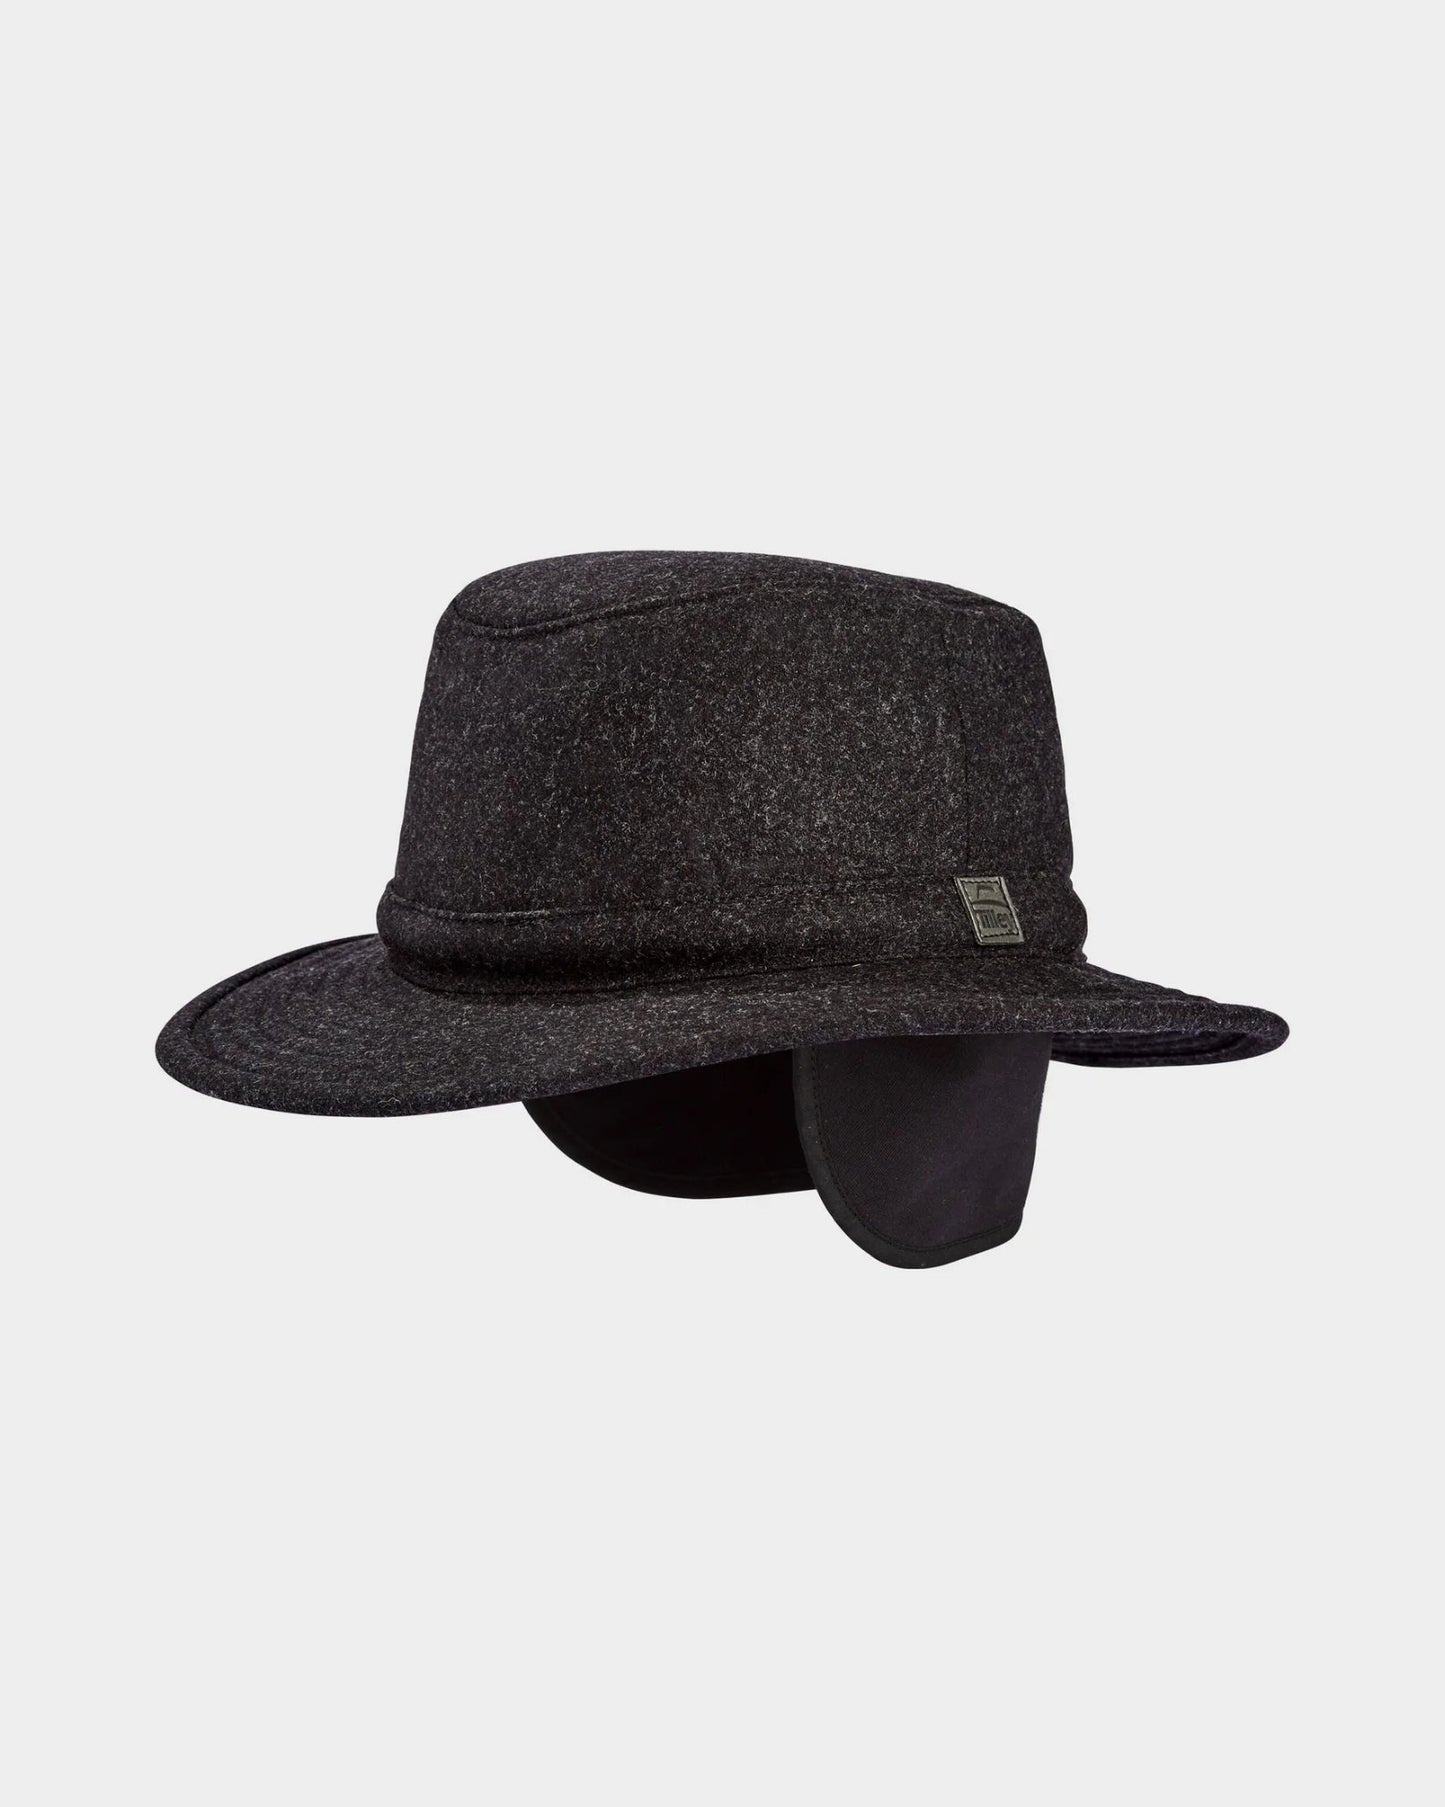 TTW2 Tec Wool Hat - Black